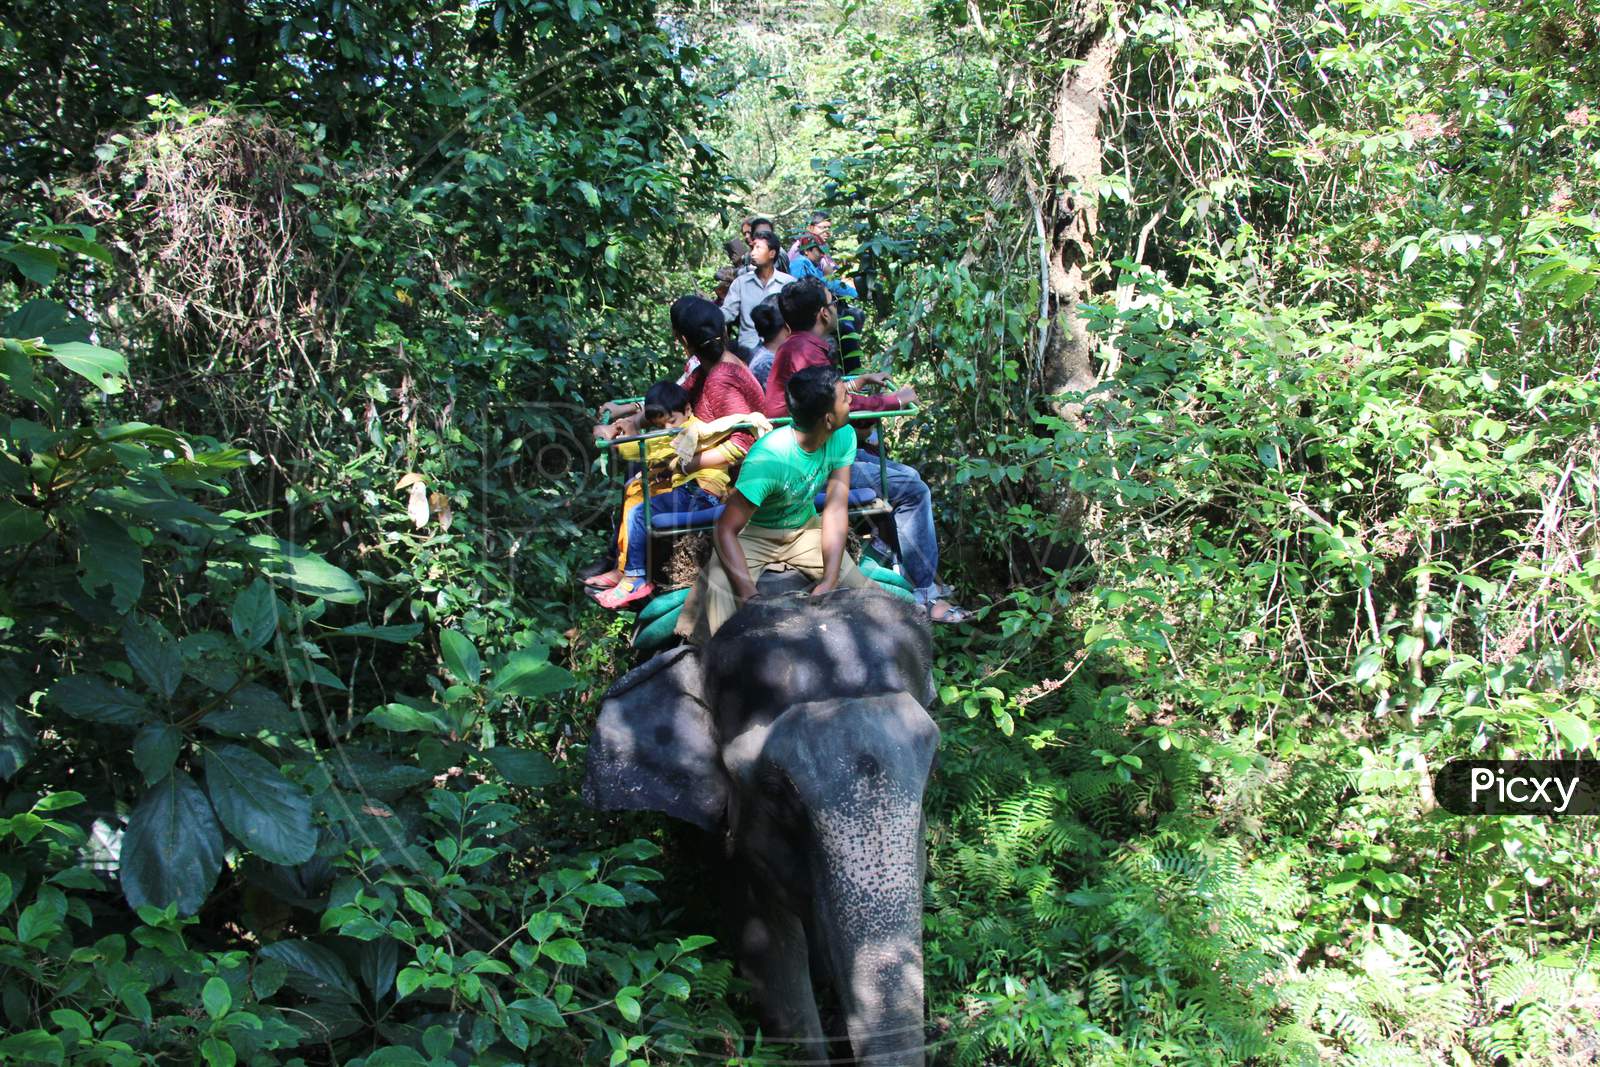 Visitors exploring a Zoo on an Elephant / Elephant Ride